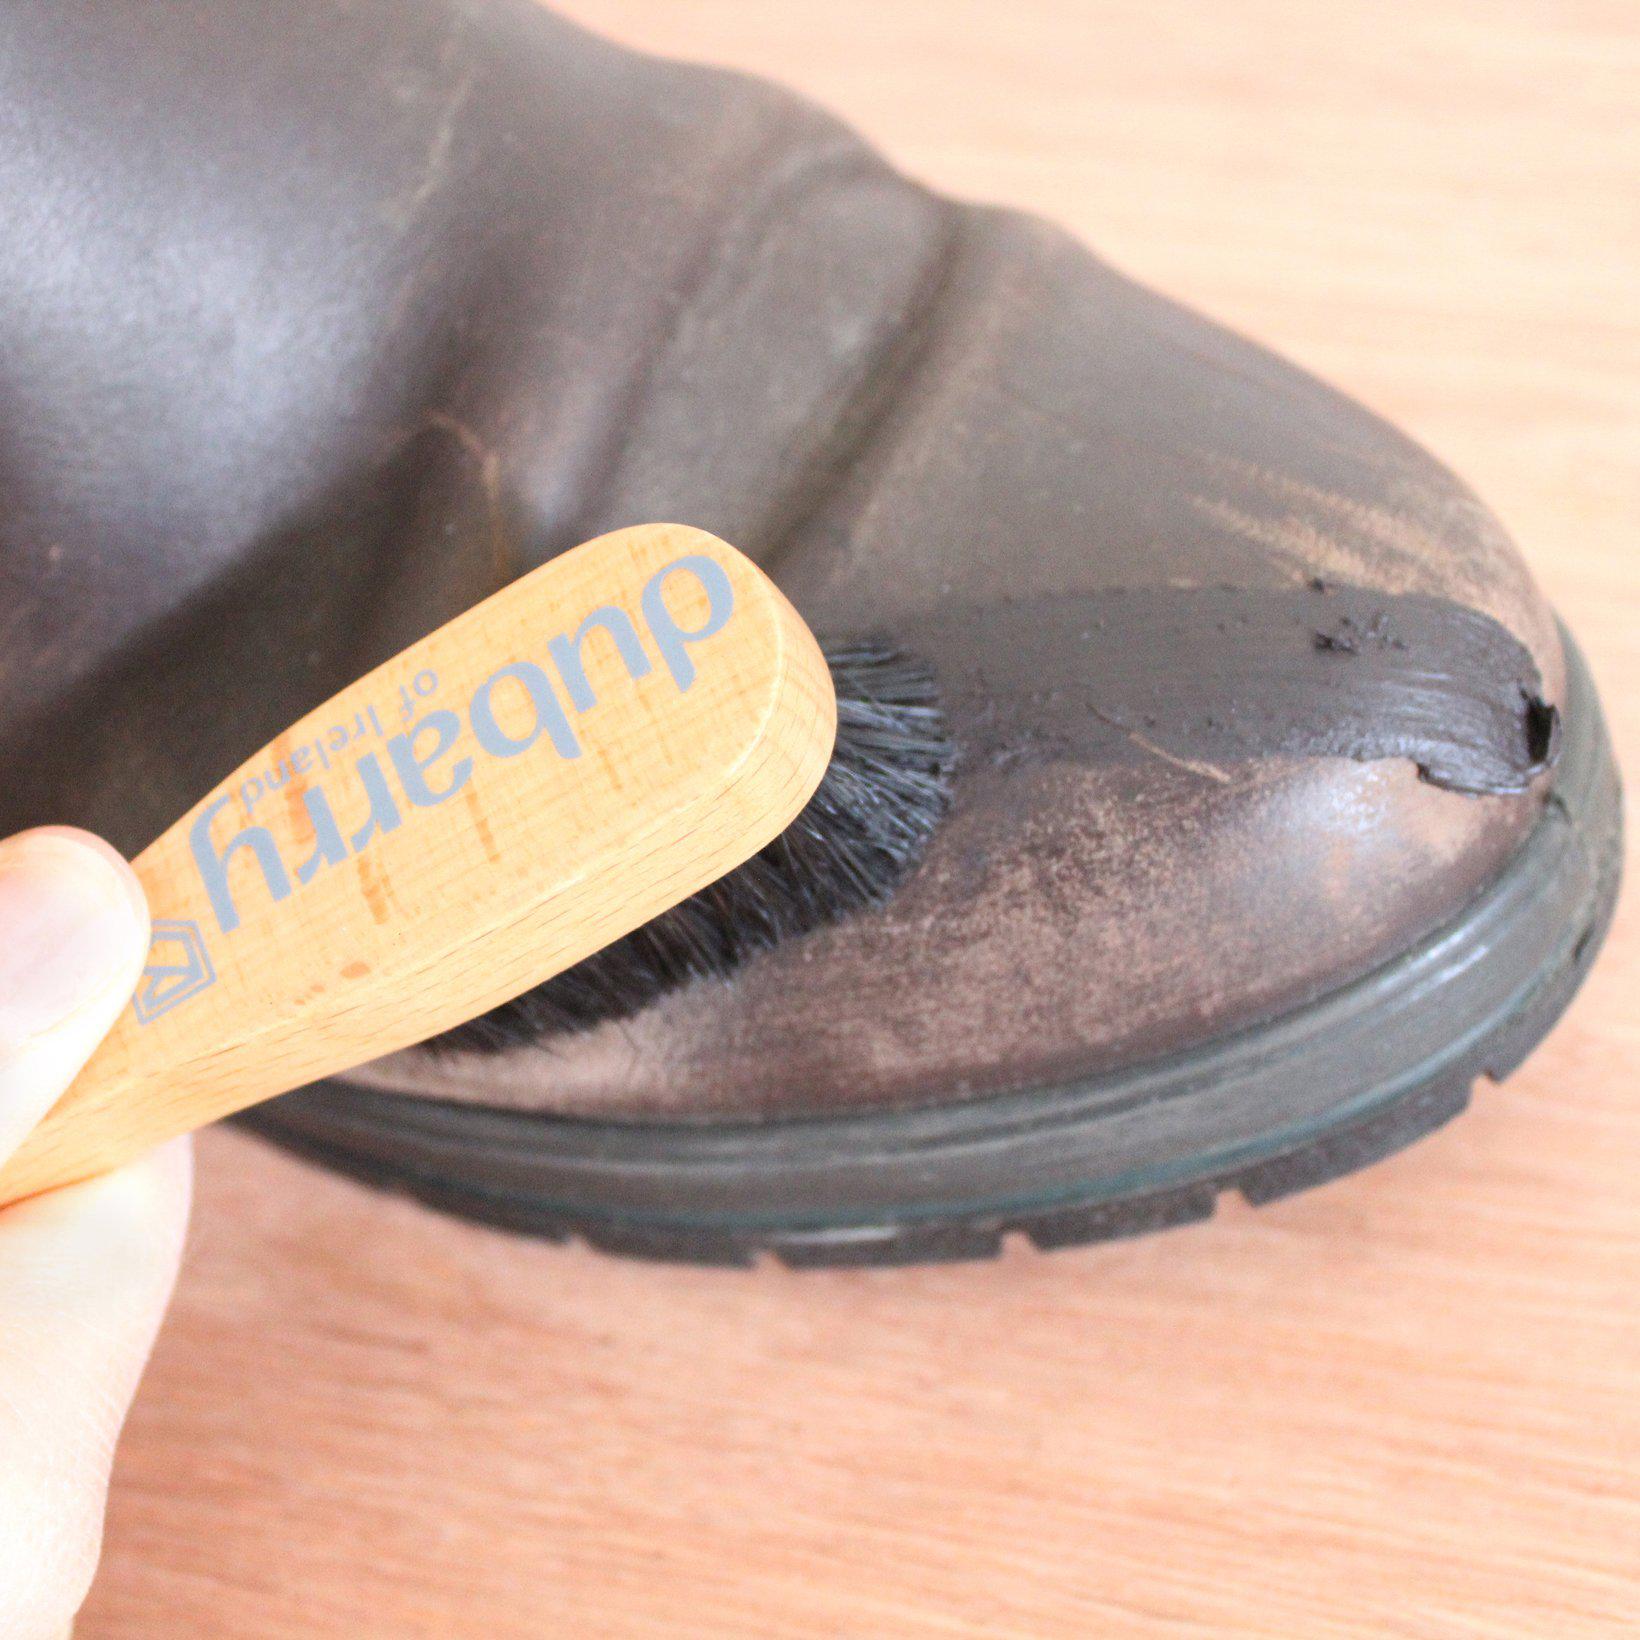 Leather Colour Restorer-Dubarry-Conrad Hasselbach Shoes & Garment